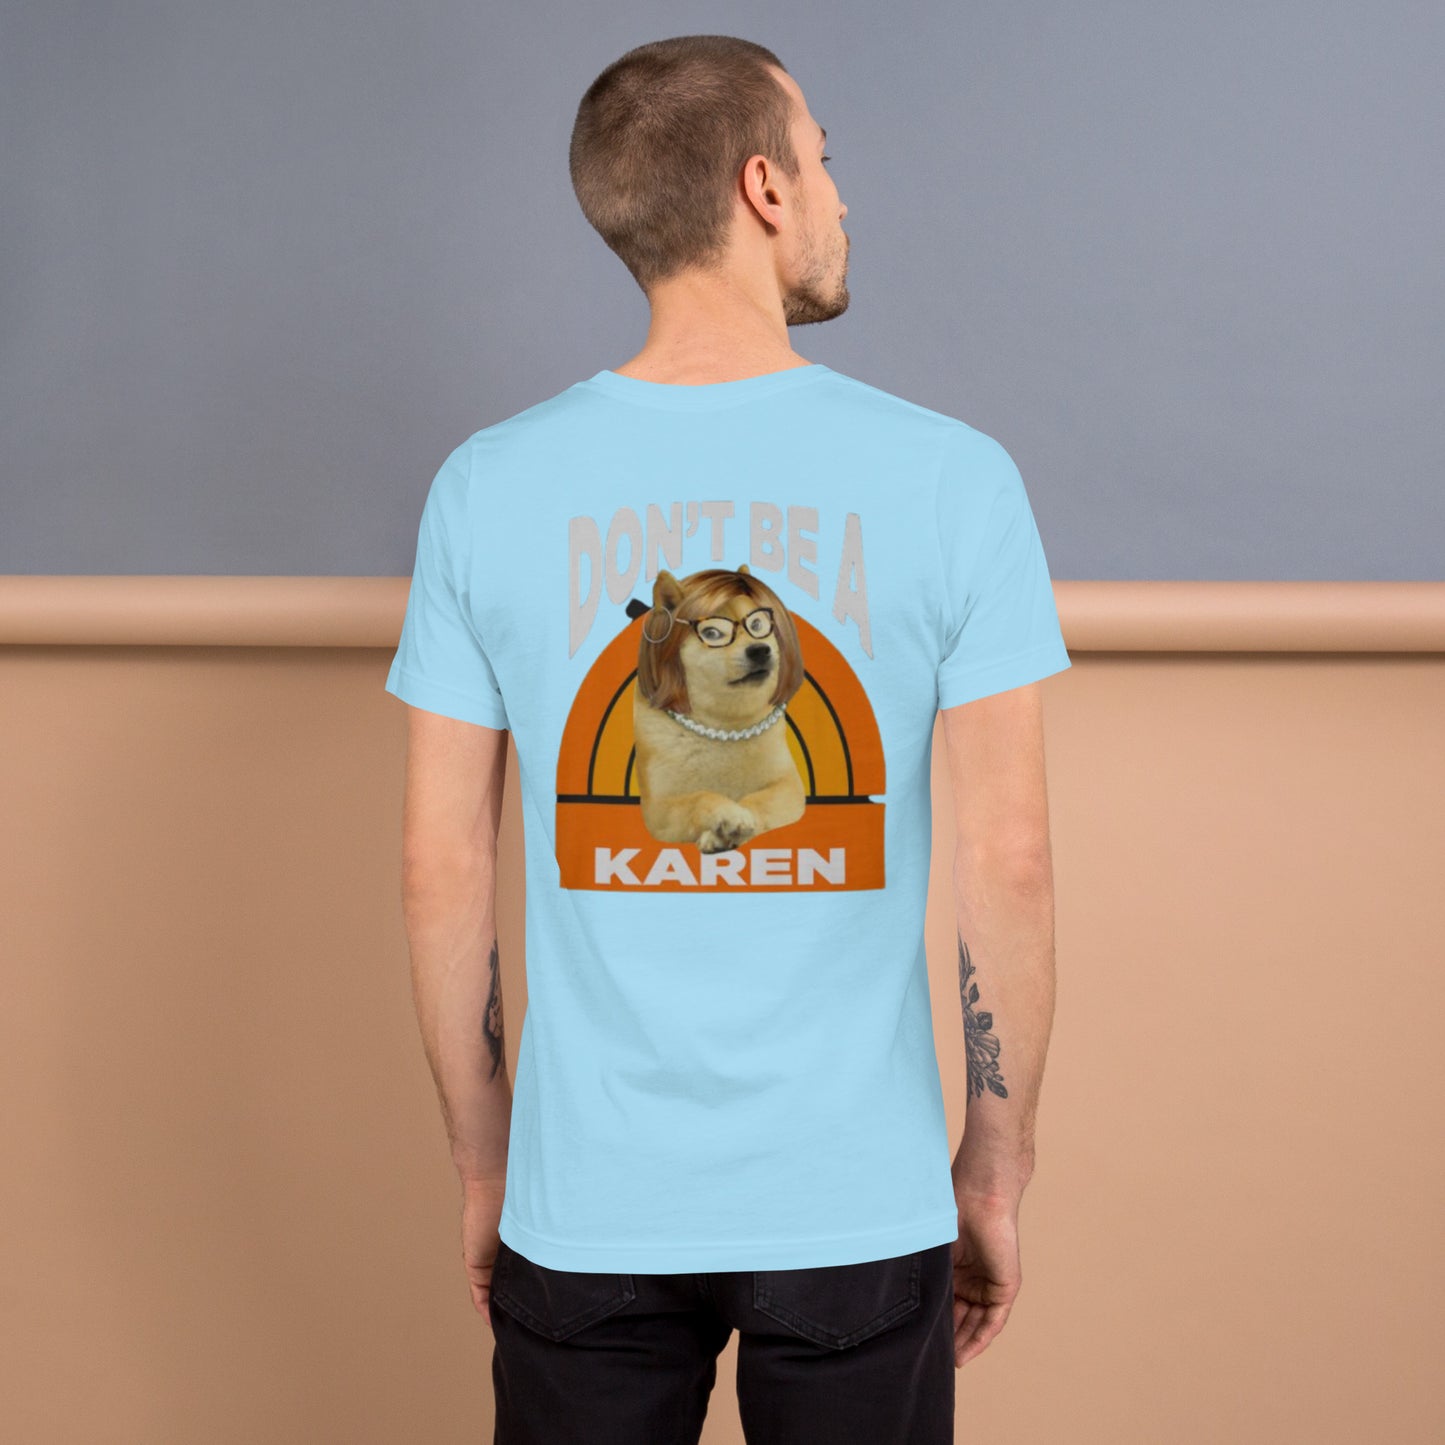 Dodge Karen - T-Shirt